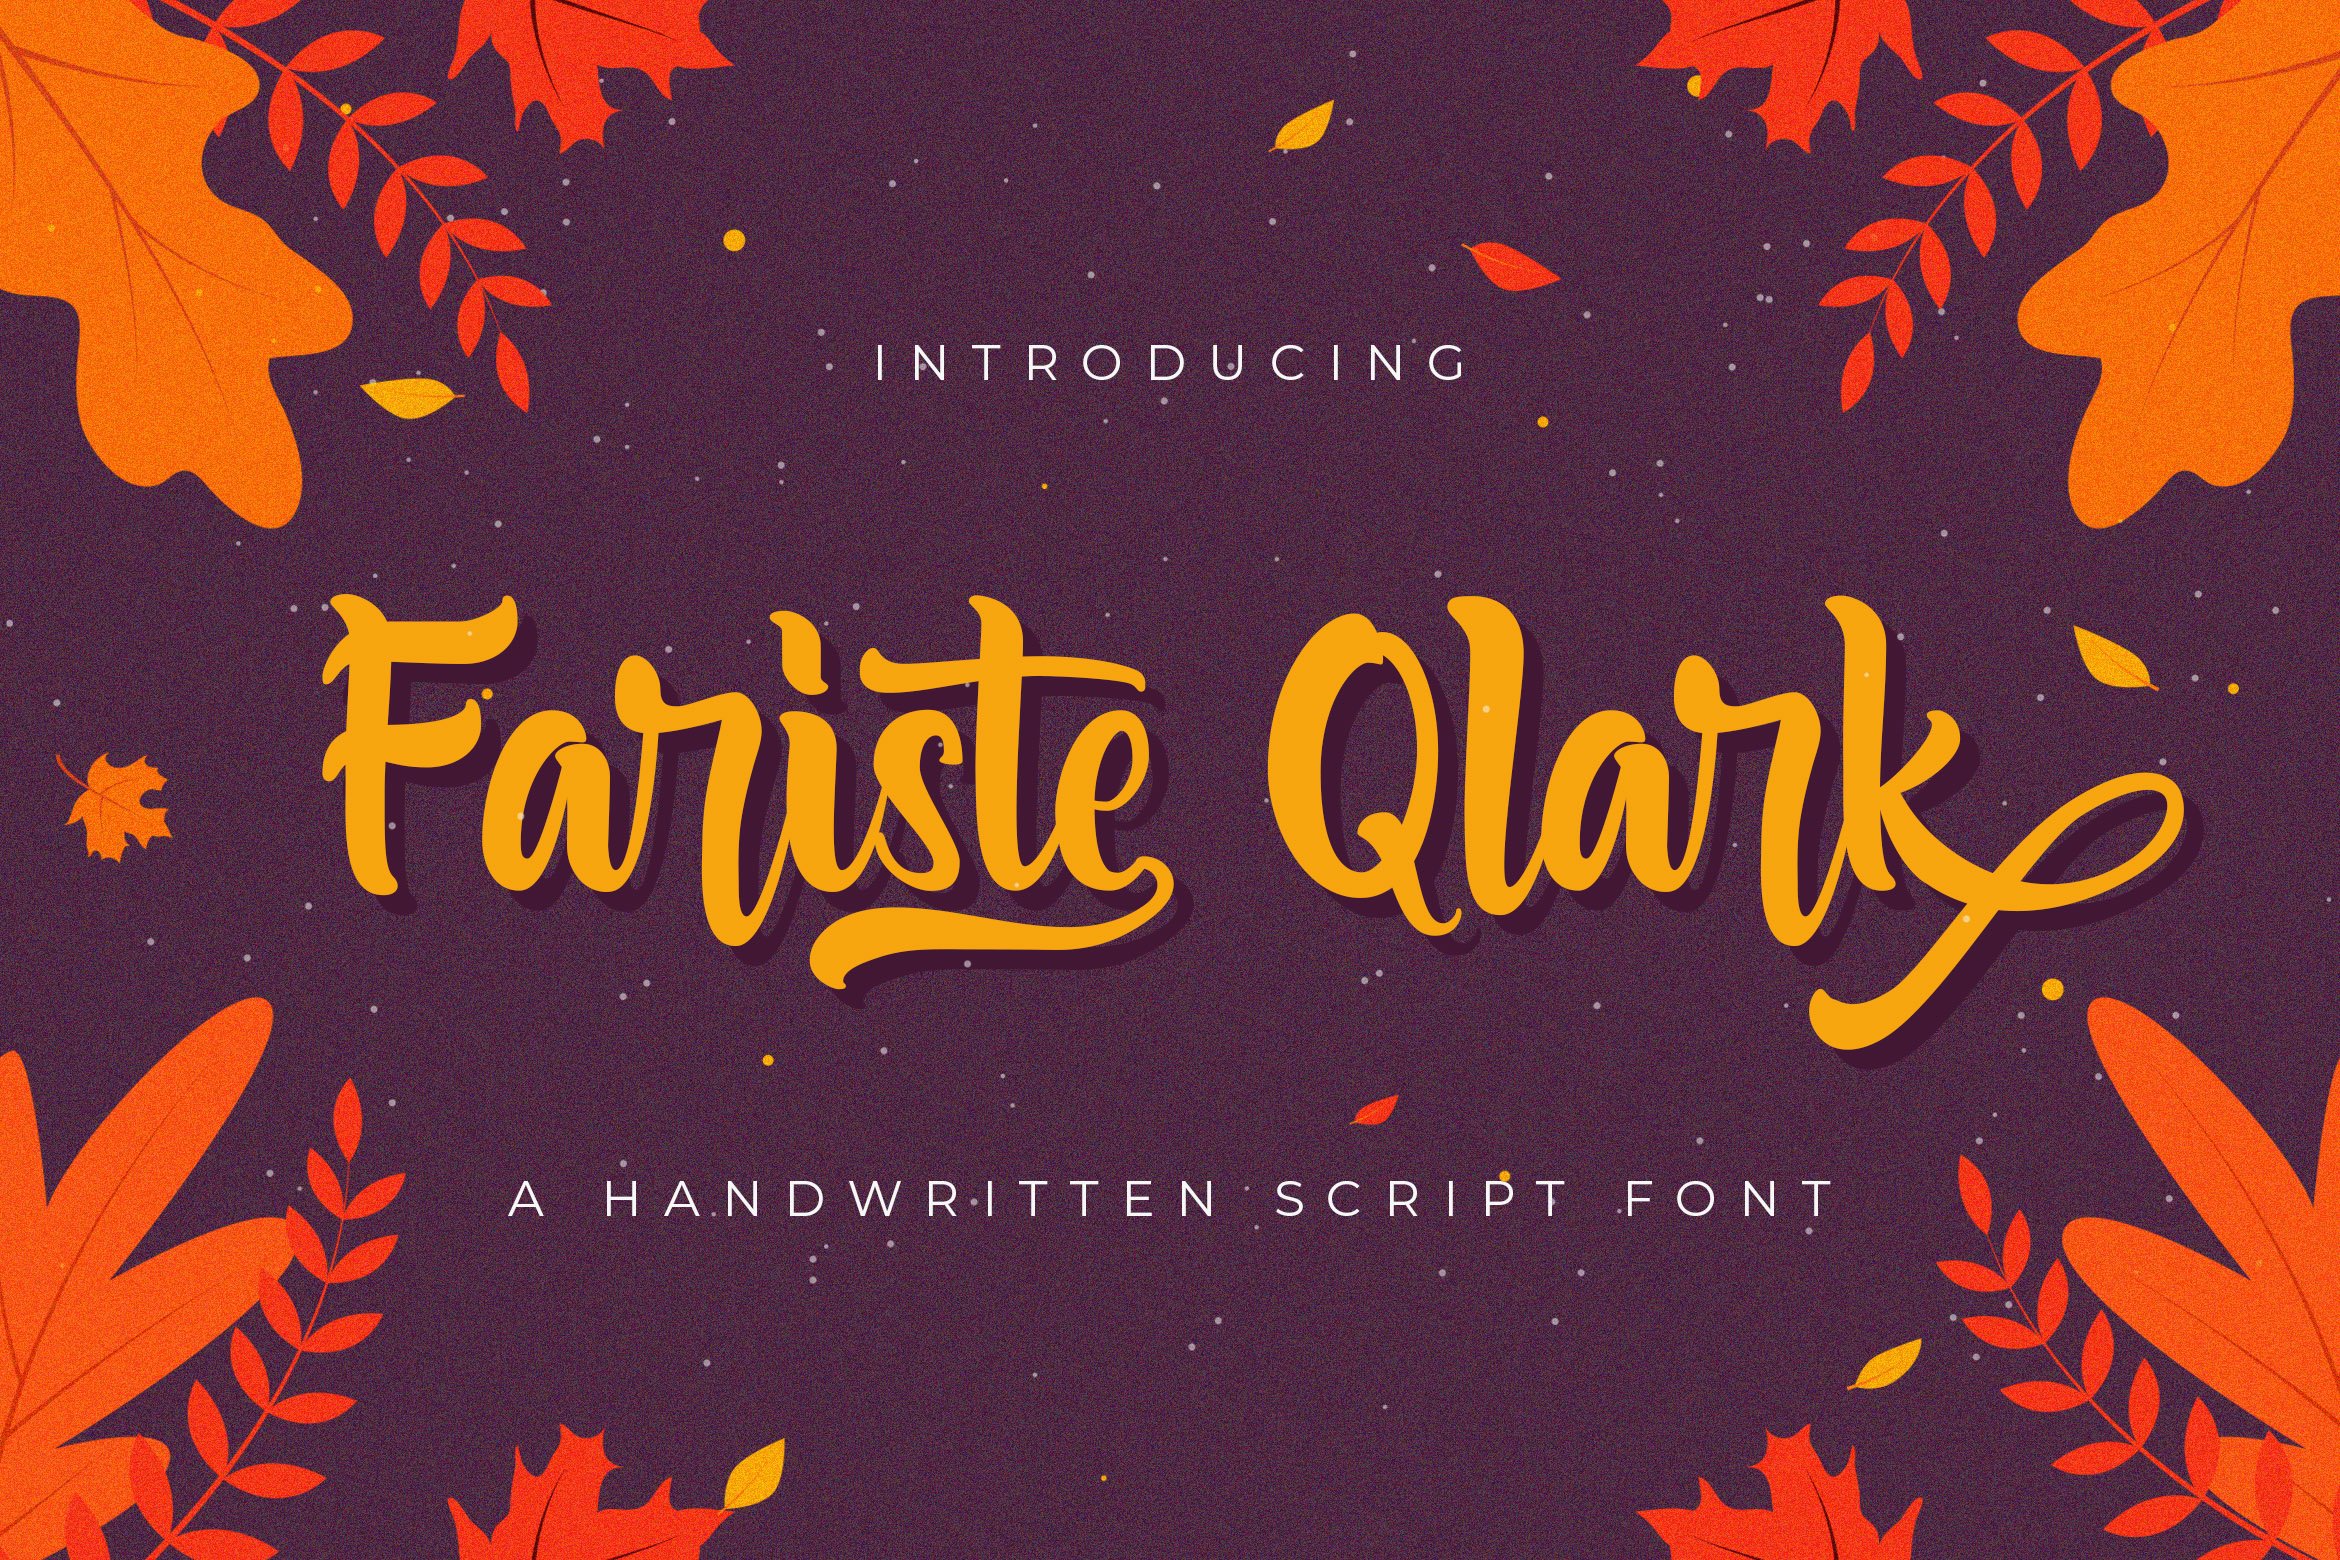 Fariste Qlark - Handwritten Font cover image.